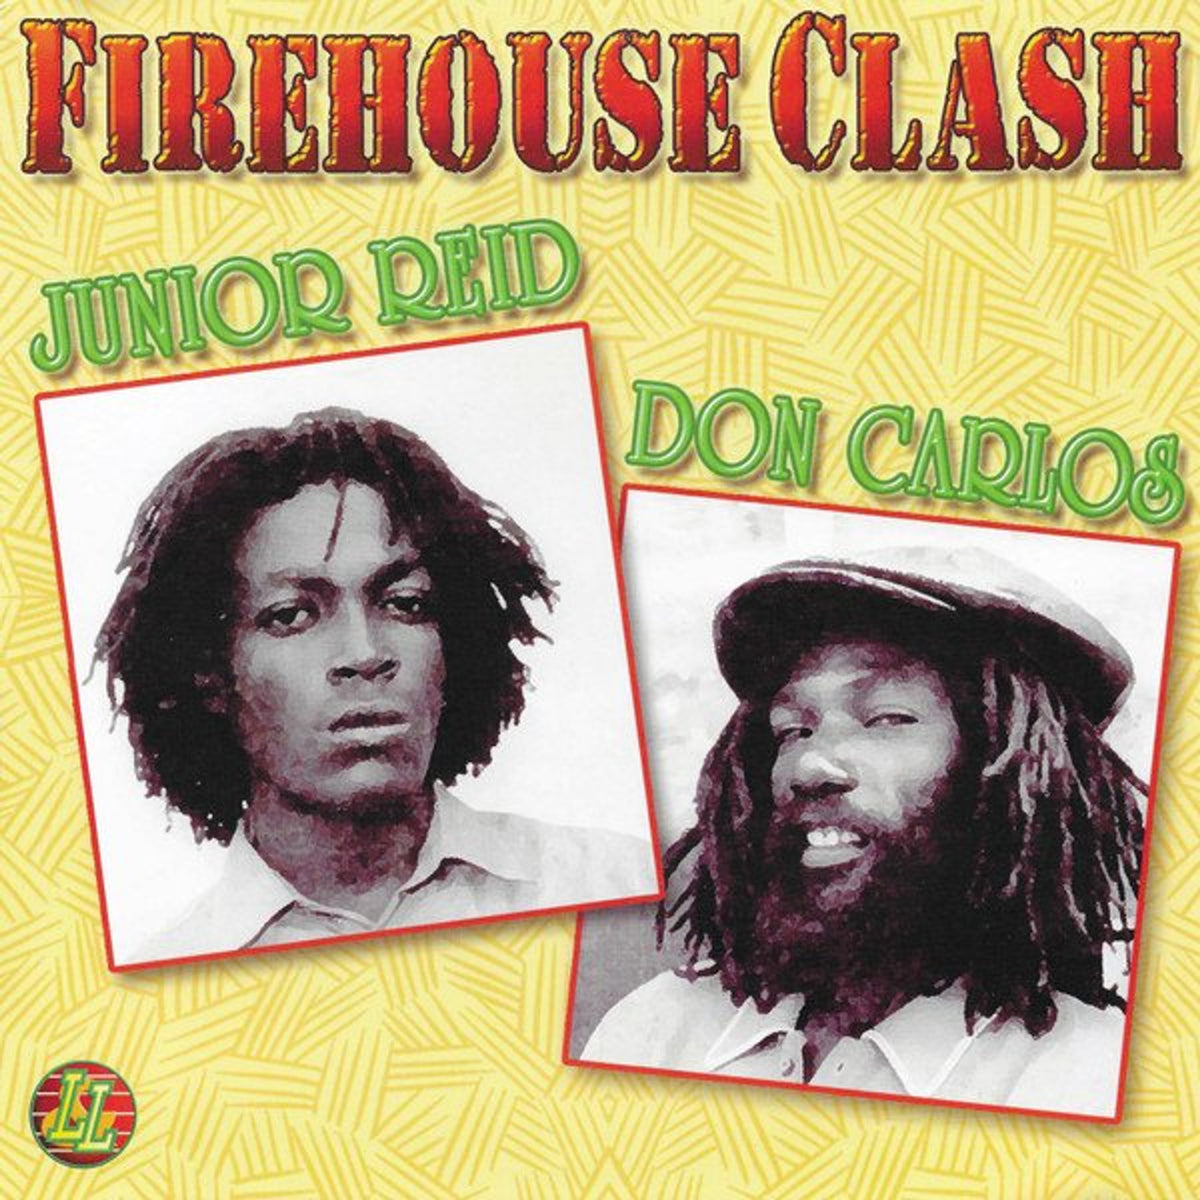 Junior Reid And Don Carlos - Firehouse Clash LP